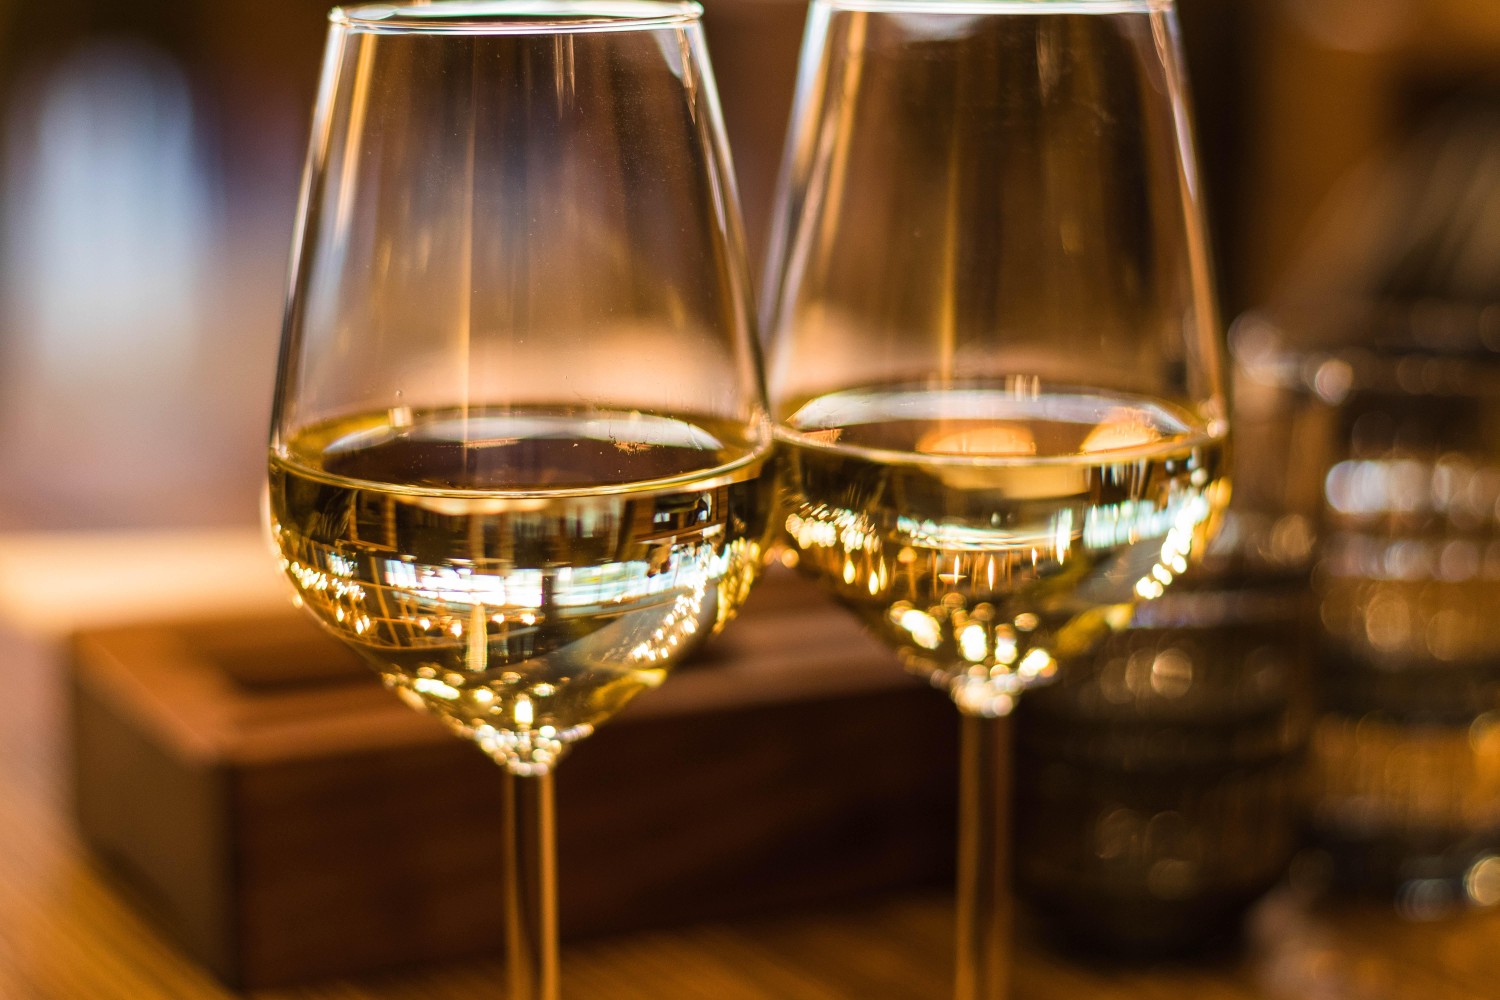 Amway Grand_Two Wine Glasses_White Wine